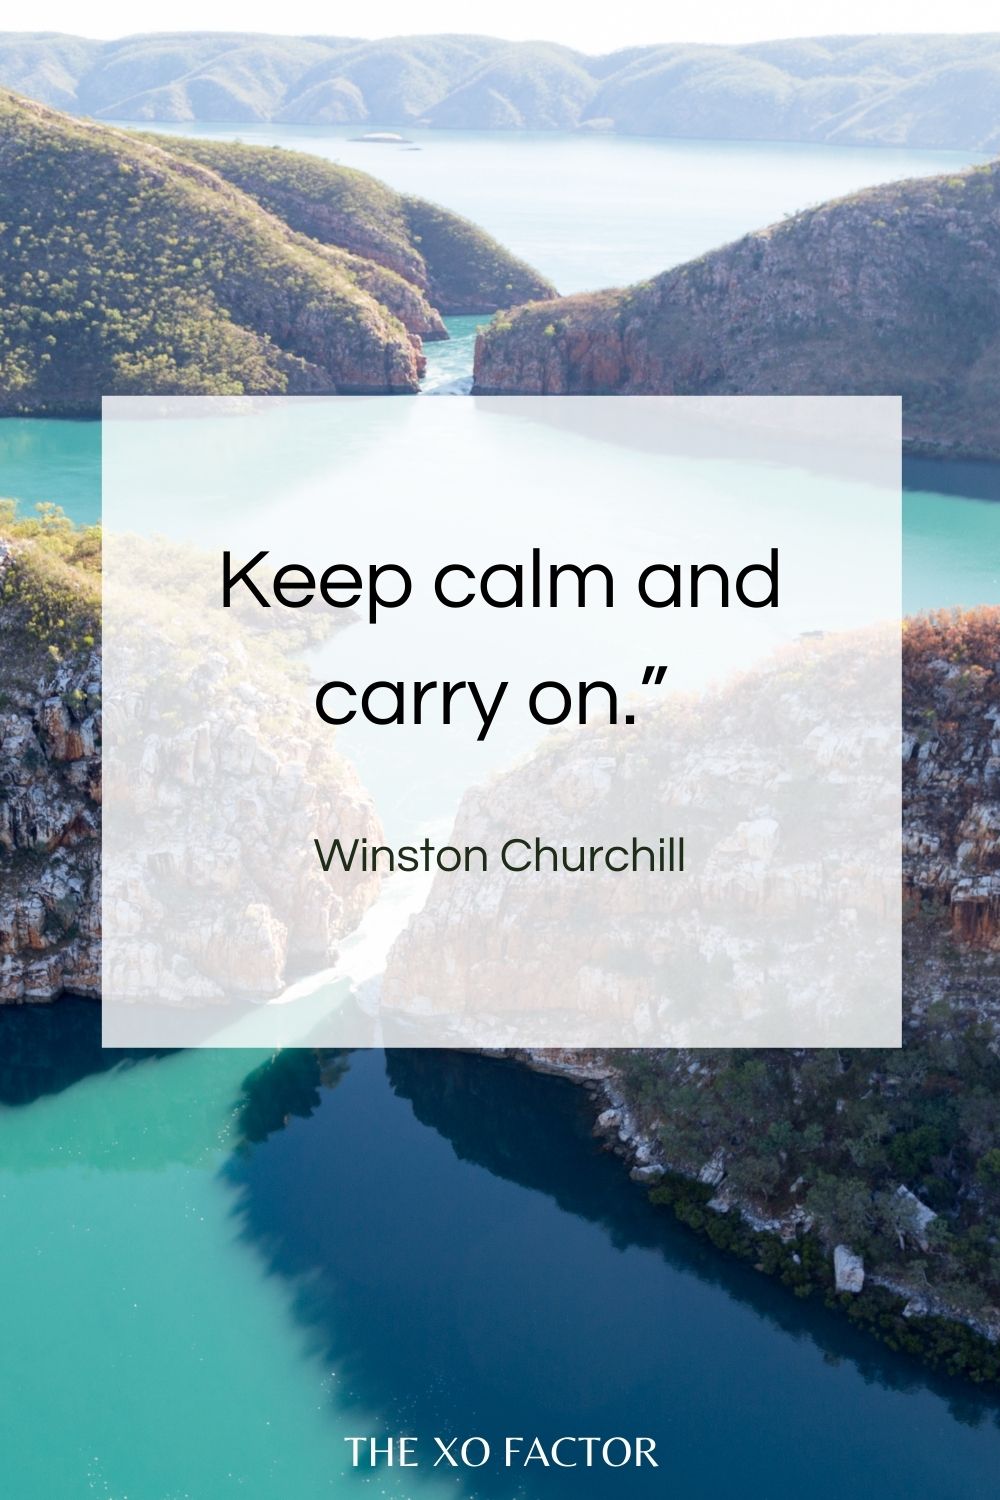 Keep calm and carry on.”  Winston Churchill